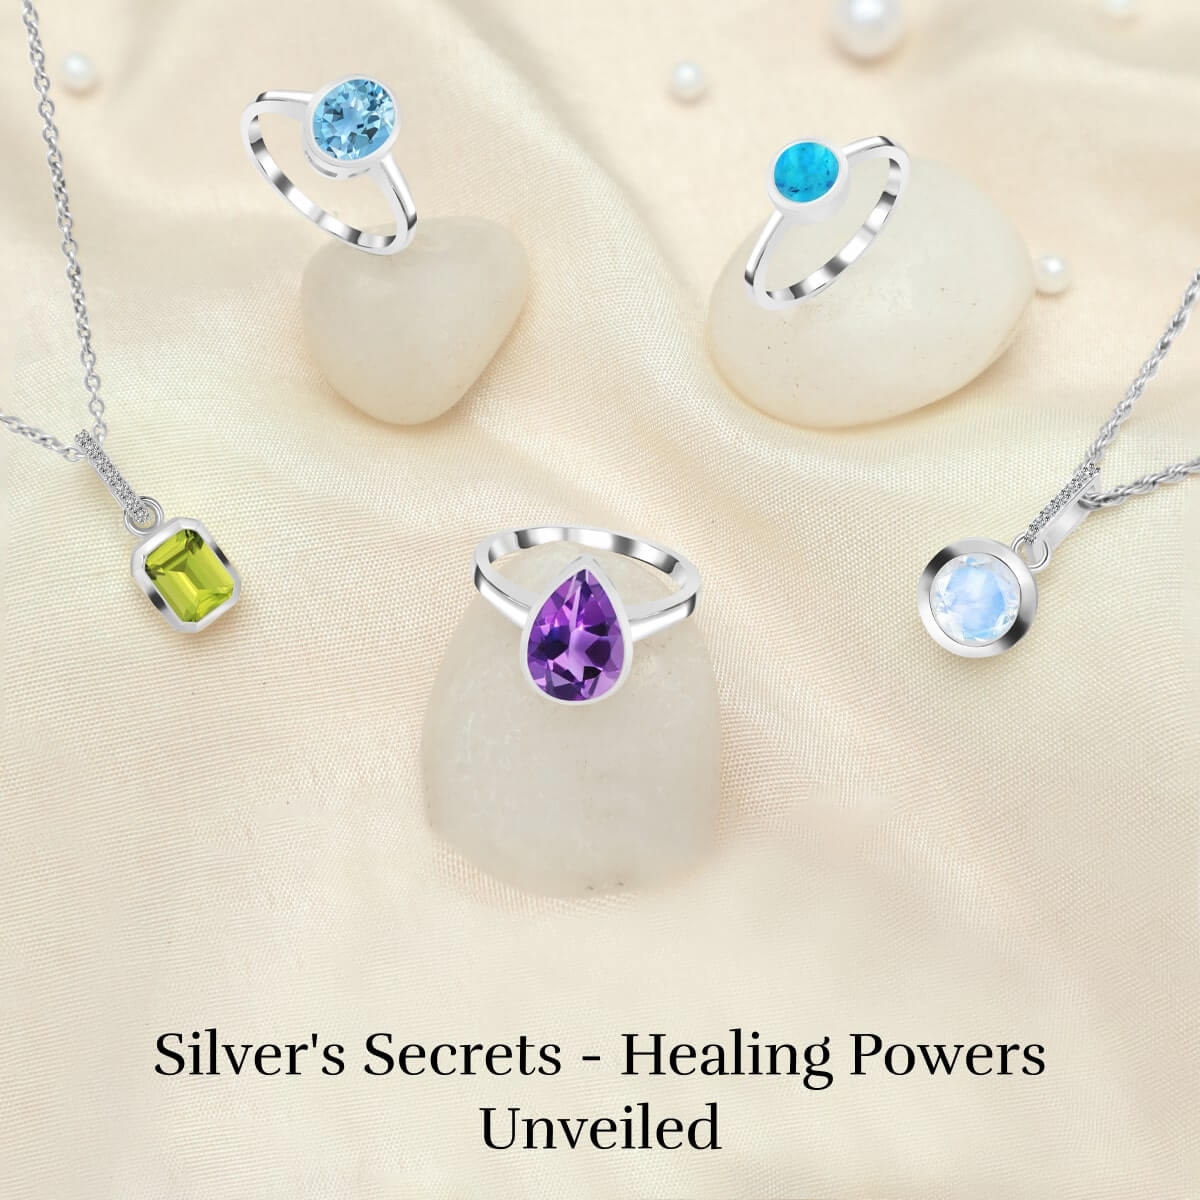 Sterling Silver: Healing properties